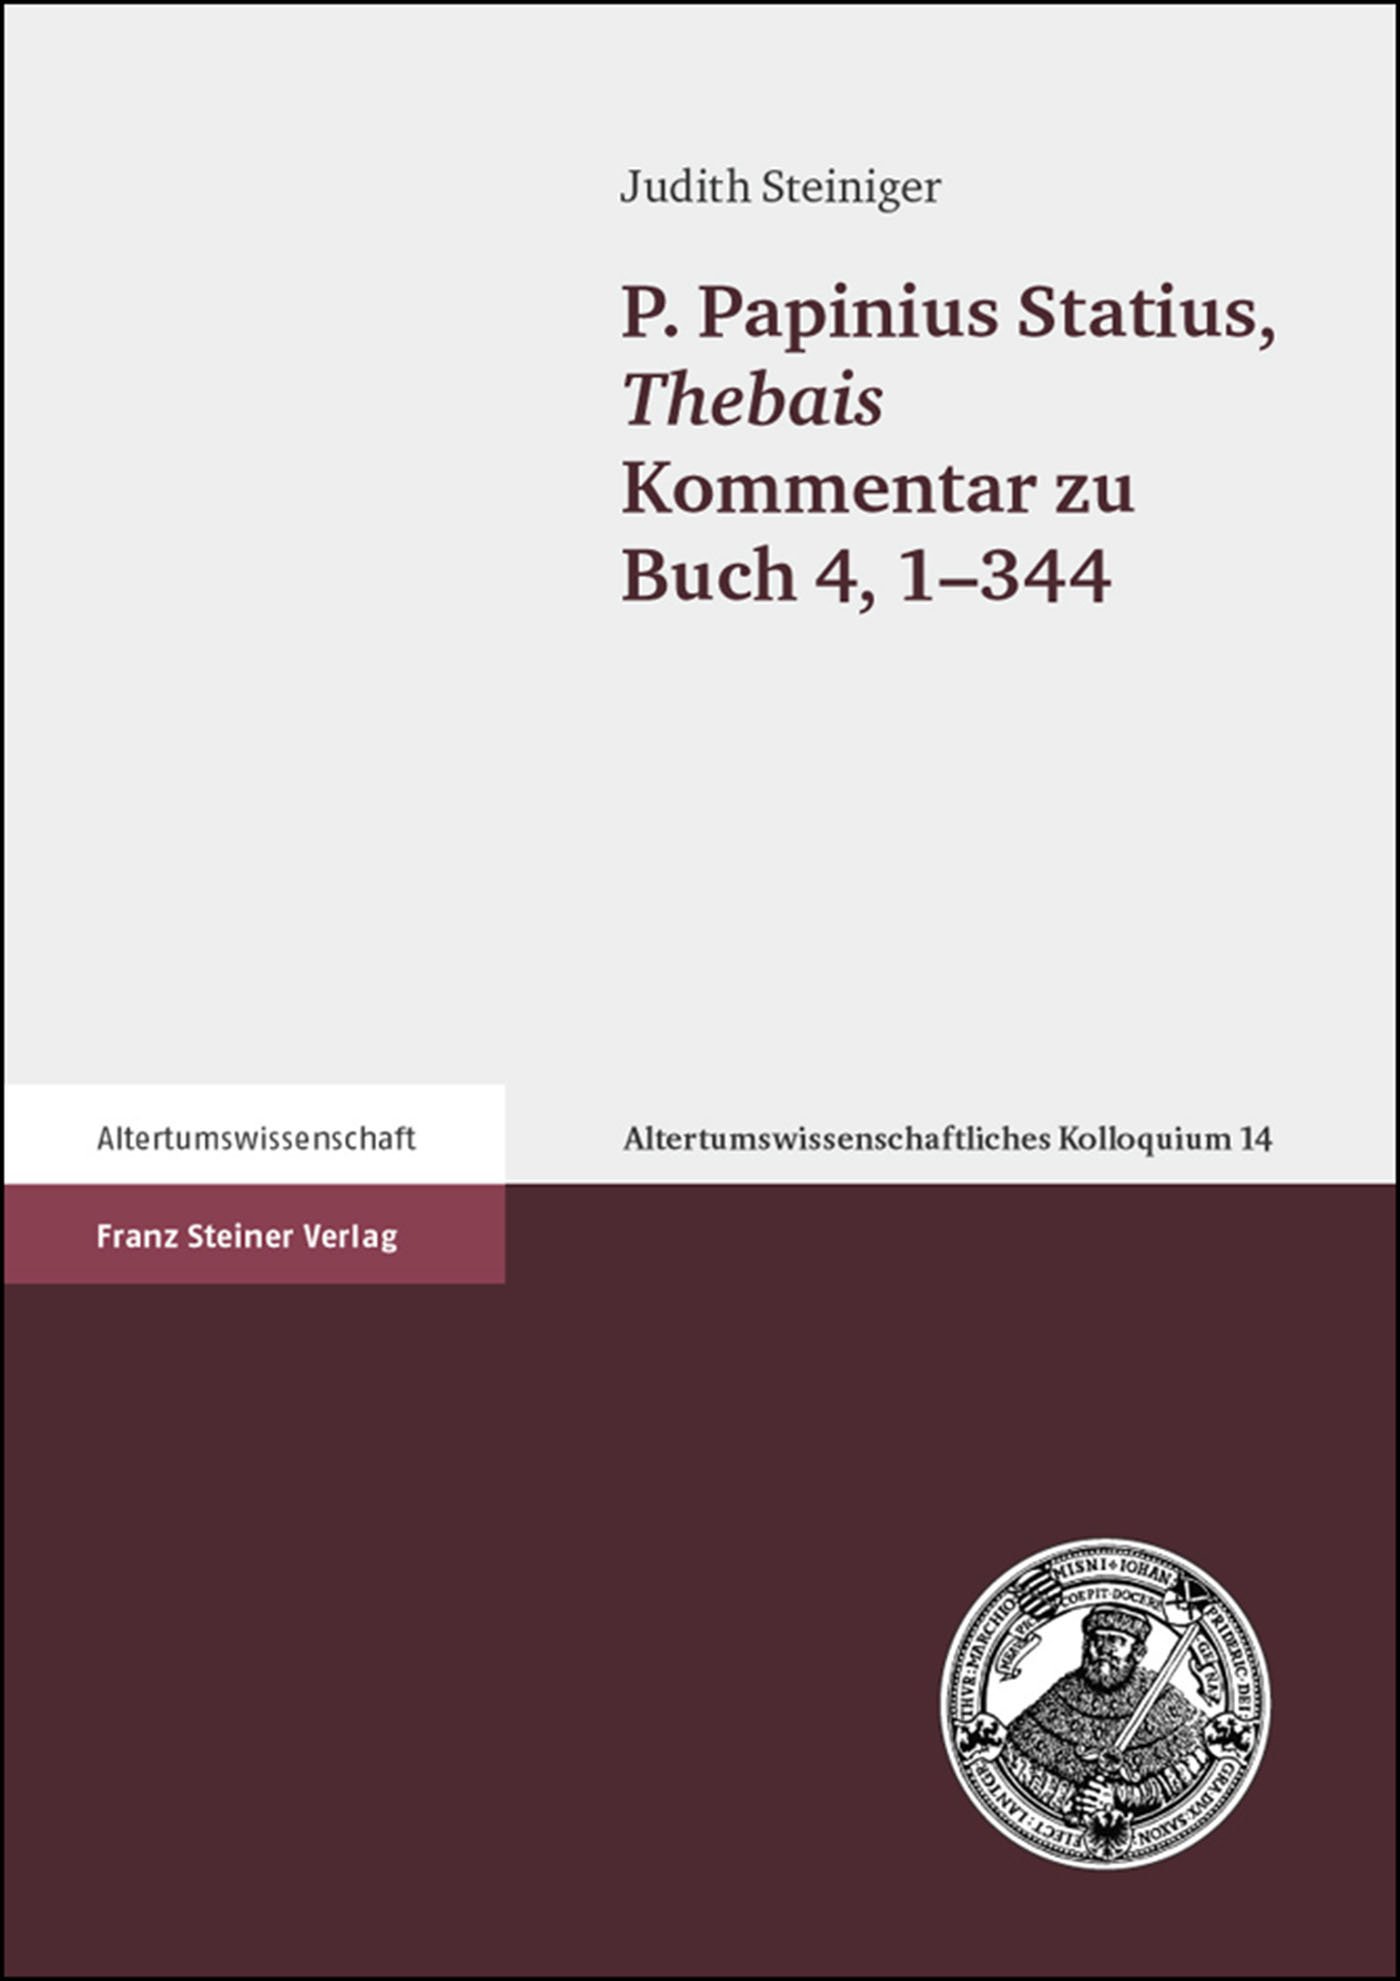 P. Papinius Statius, Thebais Kommentar zu Buch 4, 1–344